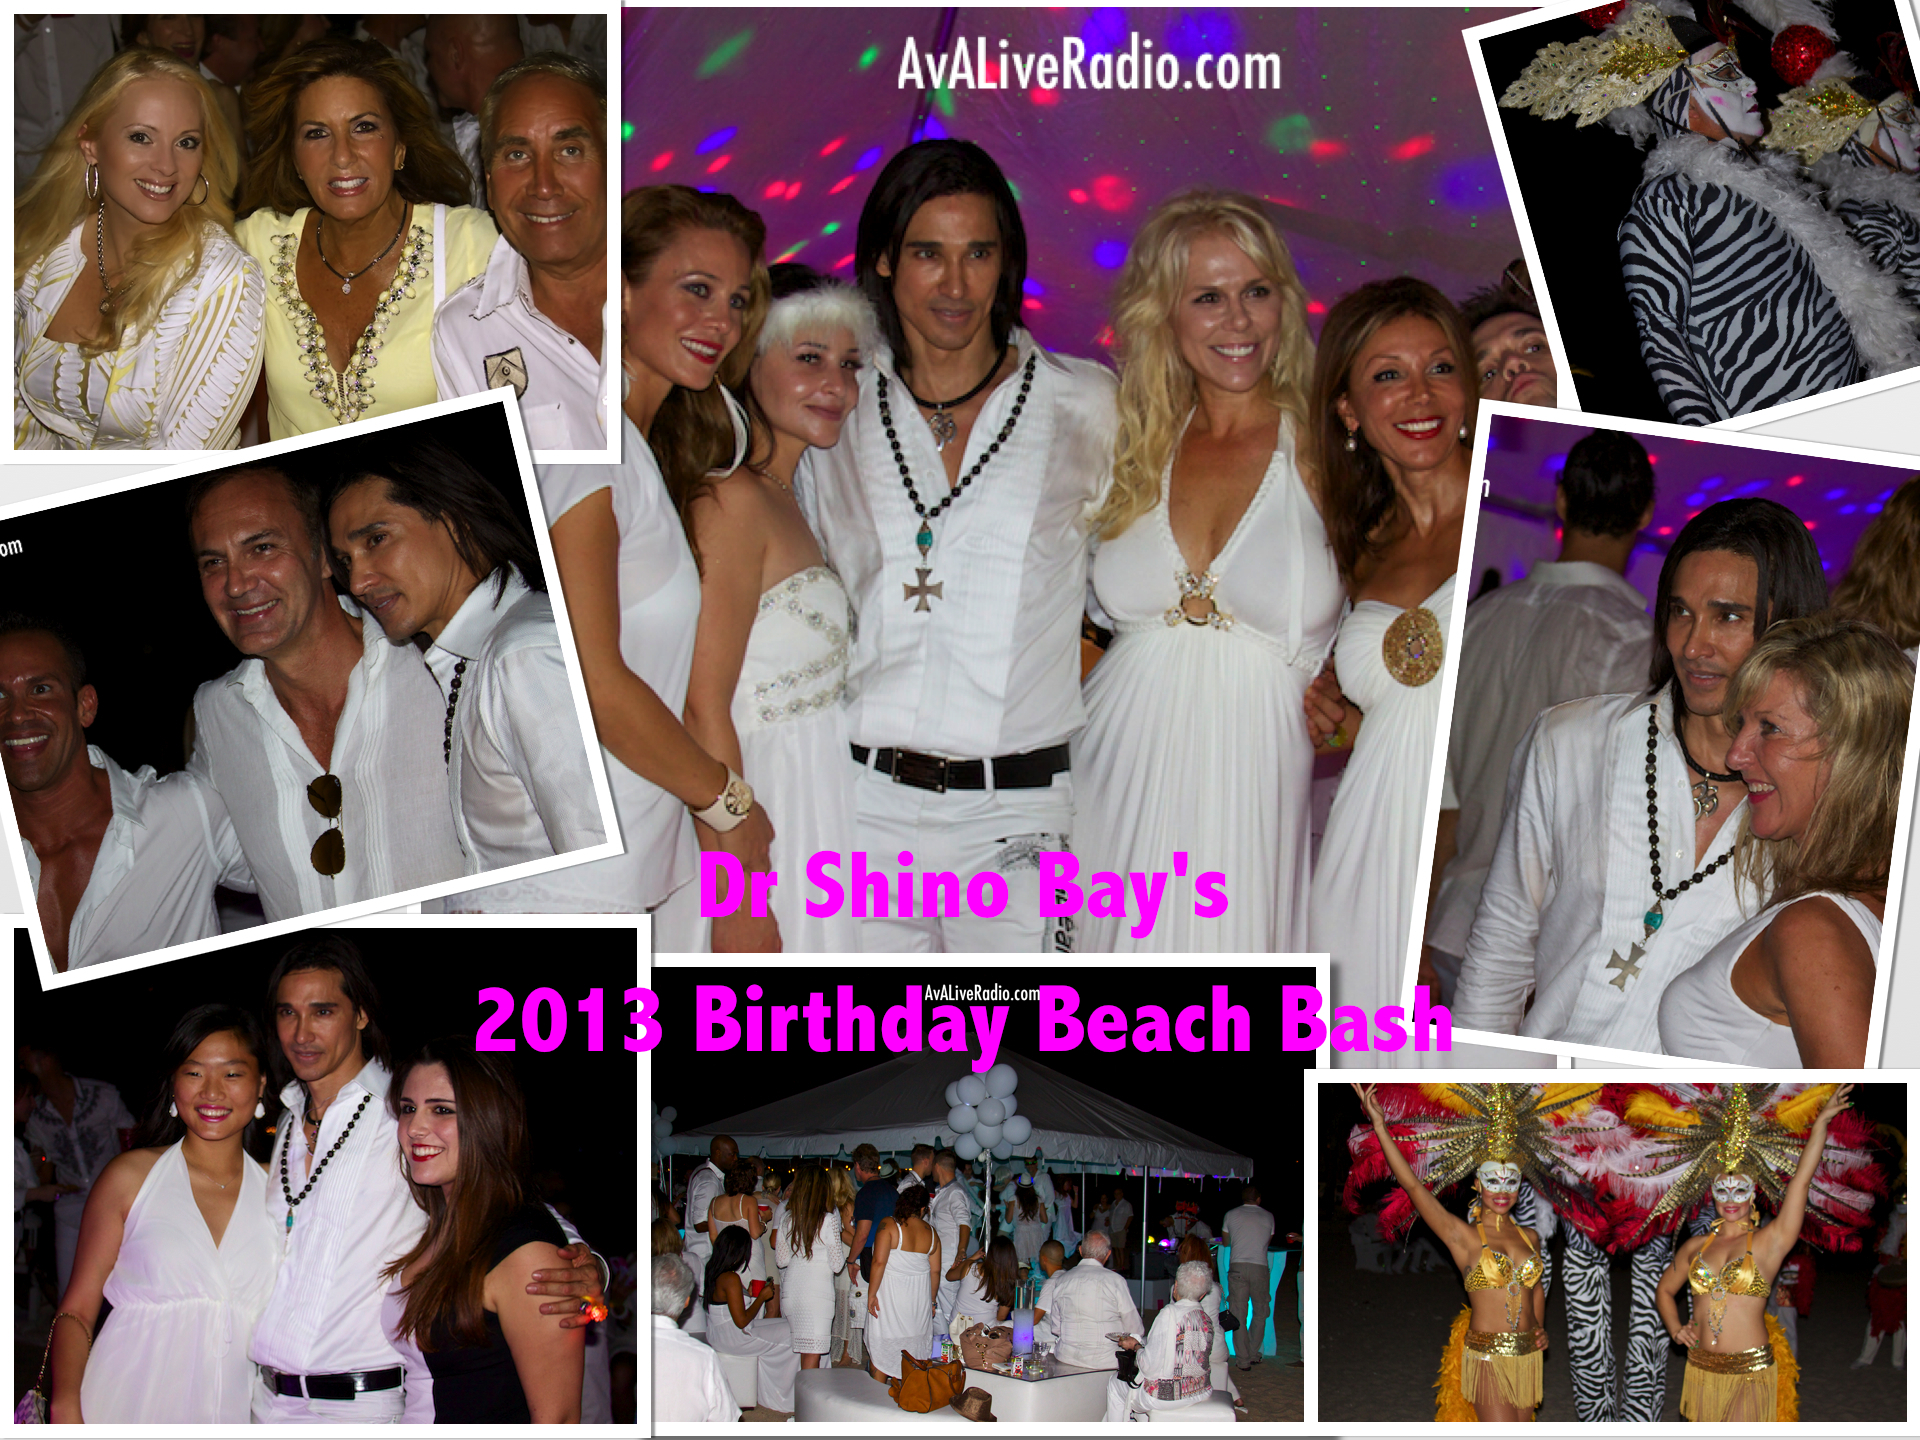 Dr_Shino_Bay_Aguilera_birthday_bash Beach_2013_logo